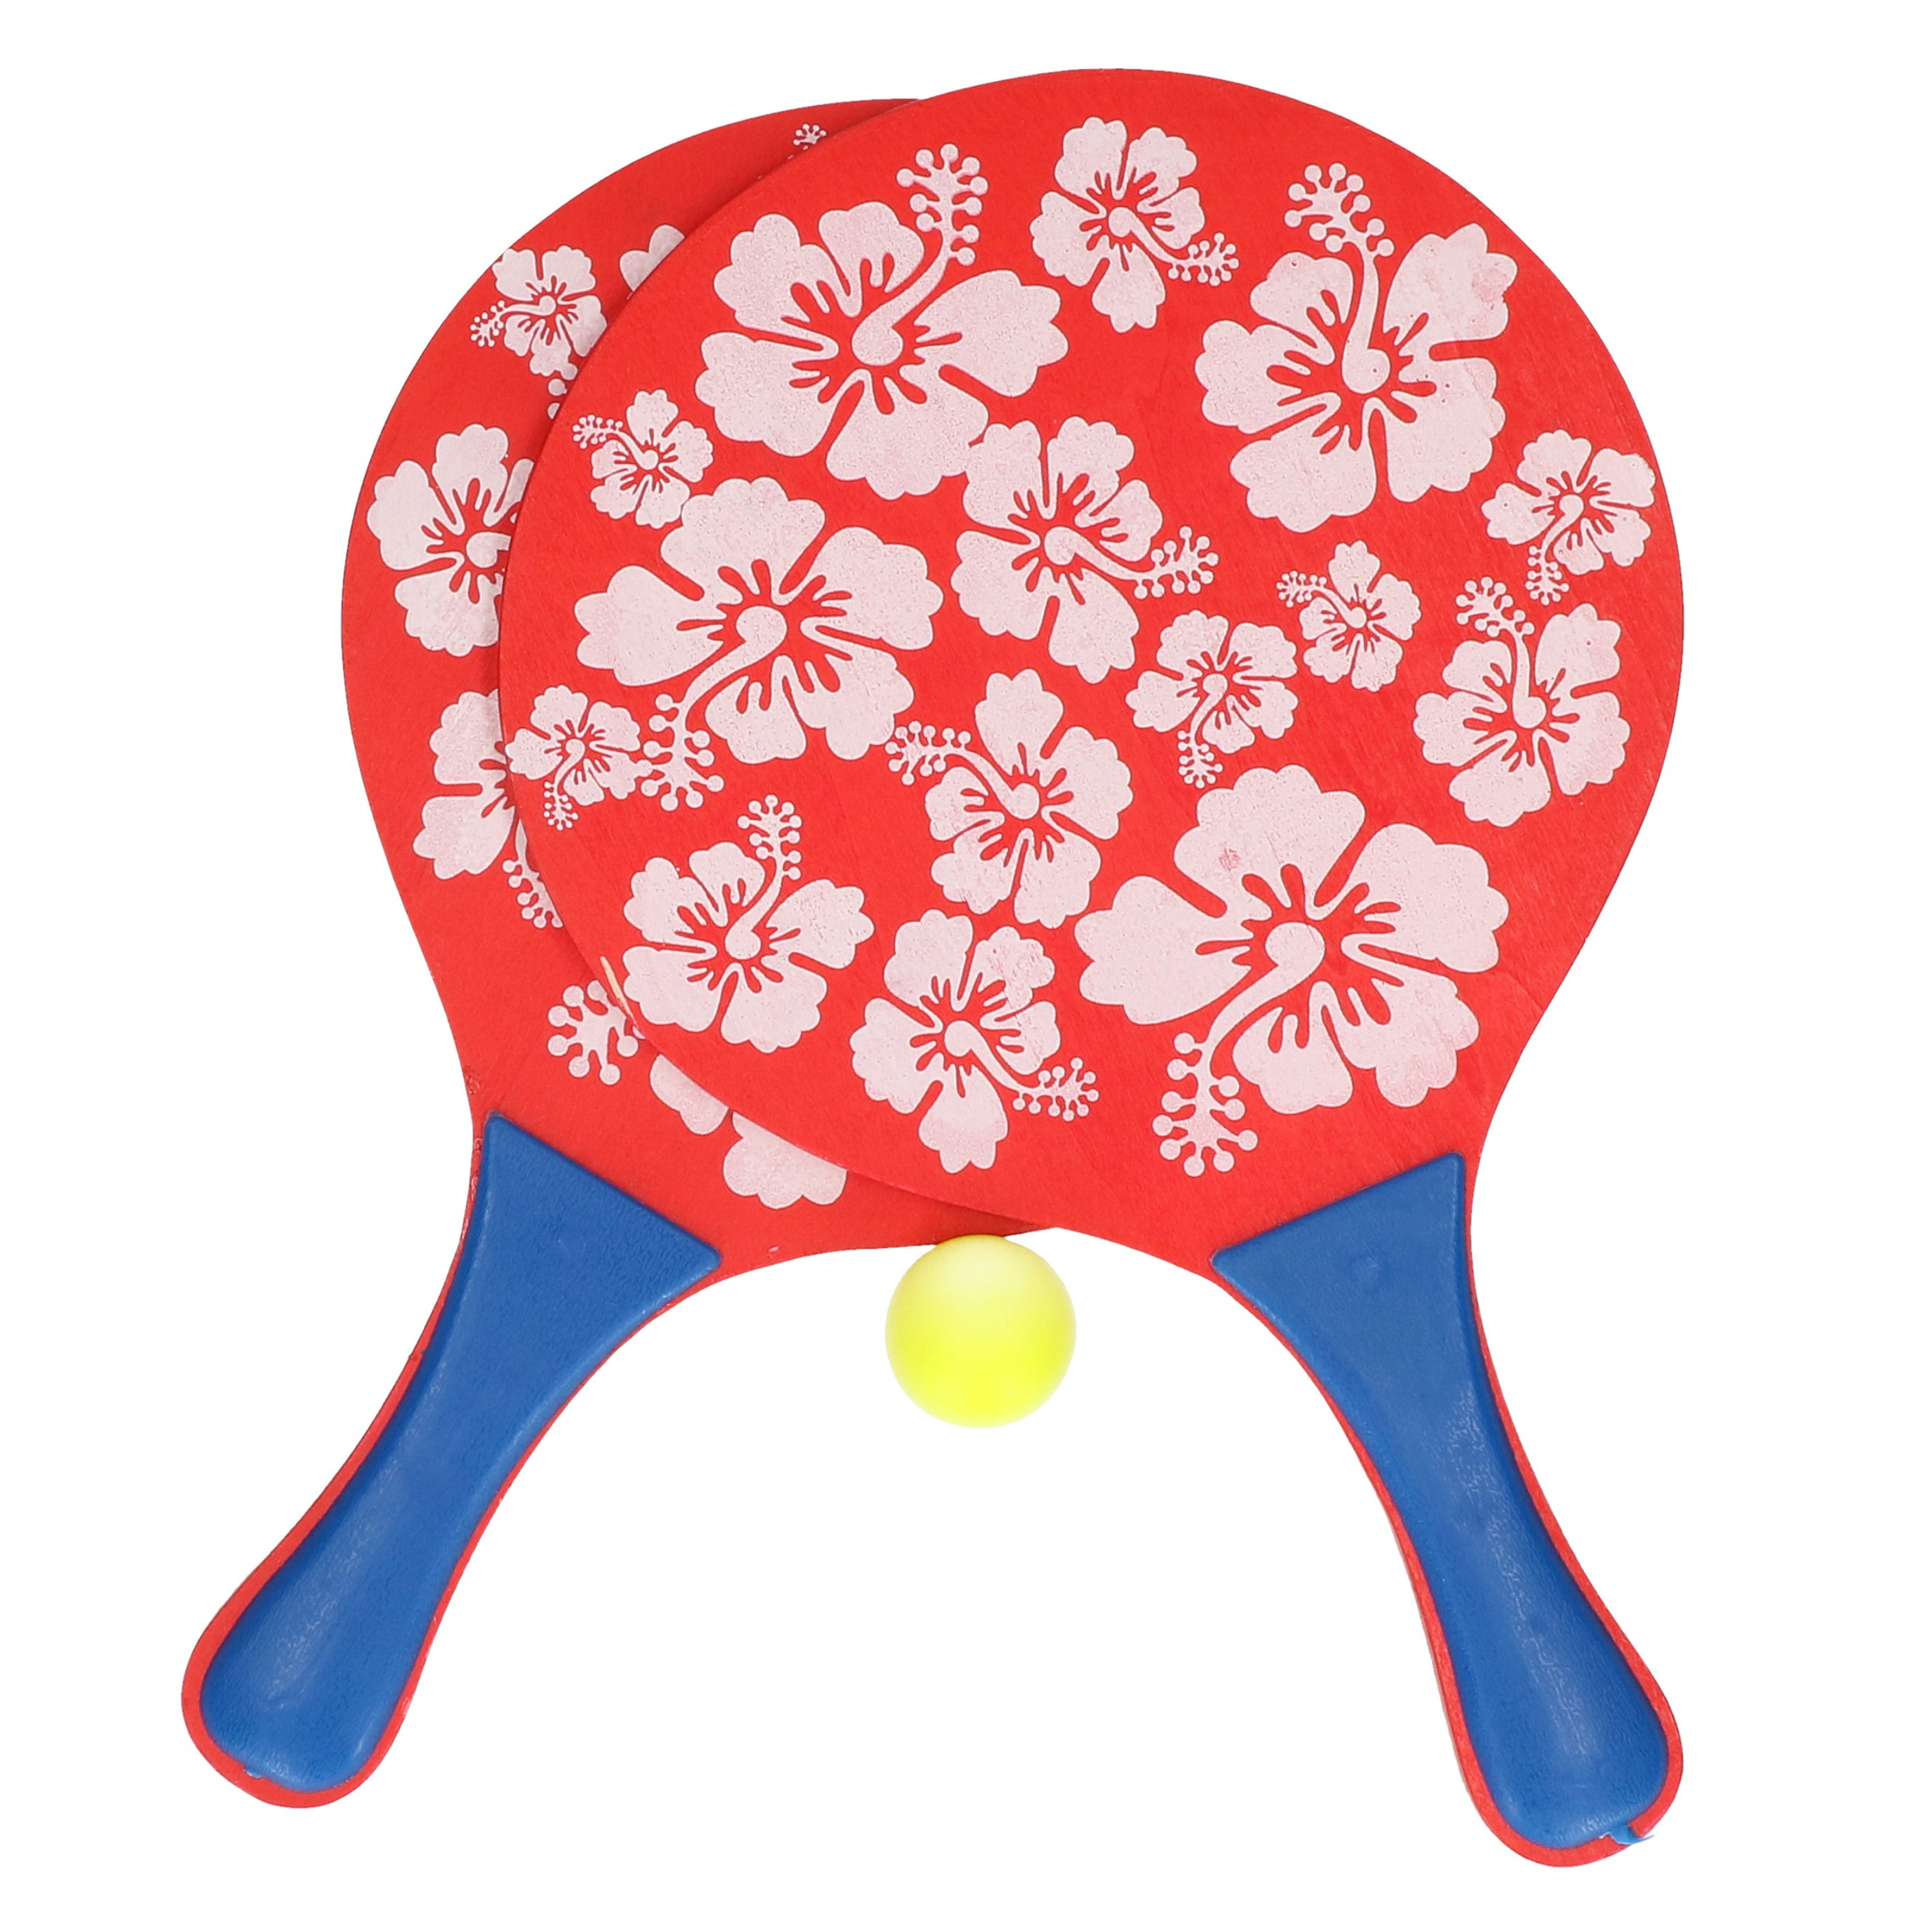 Rode beachball set met bloemenprint buitenspeelgoed